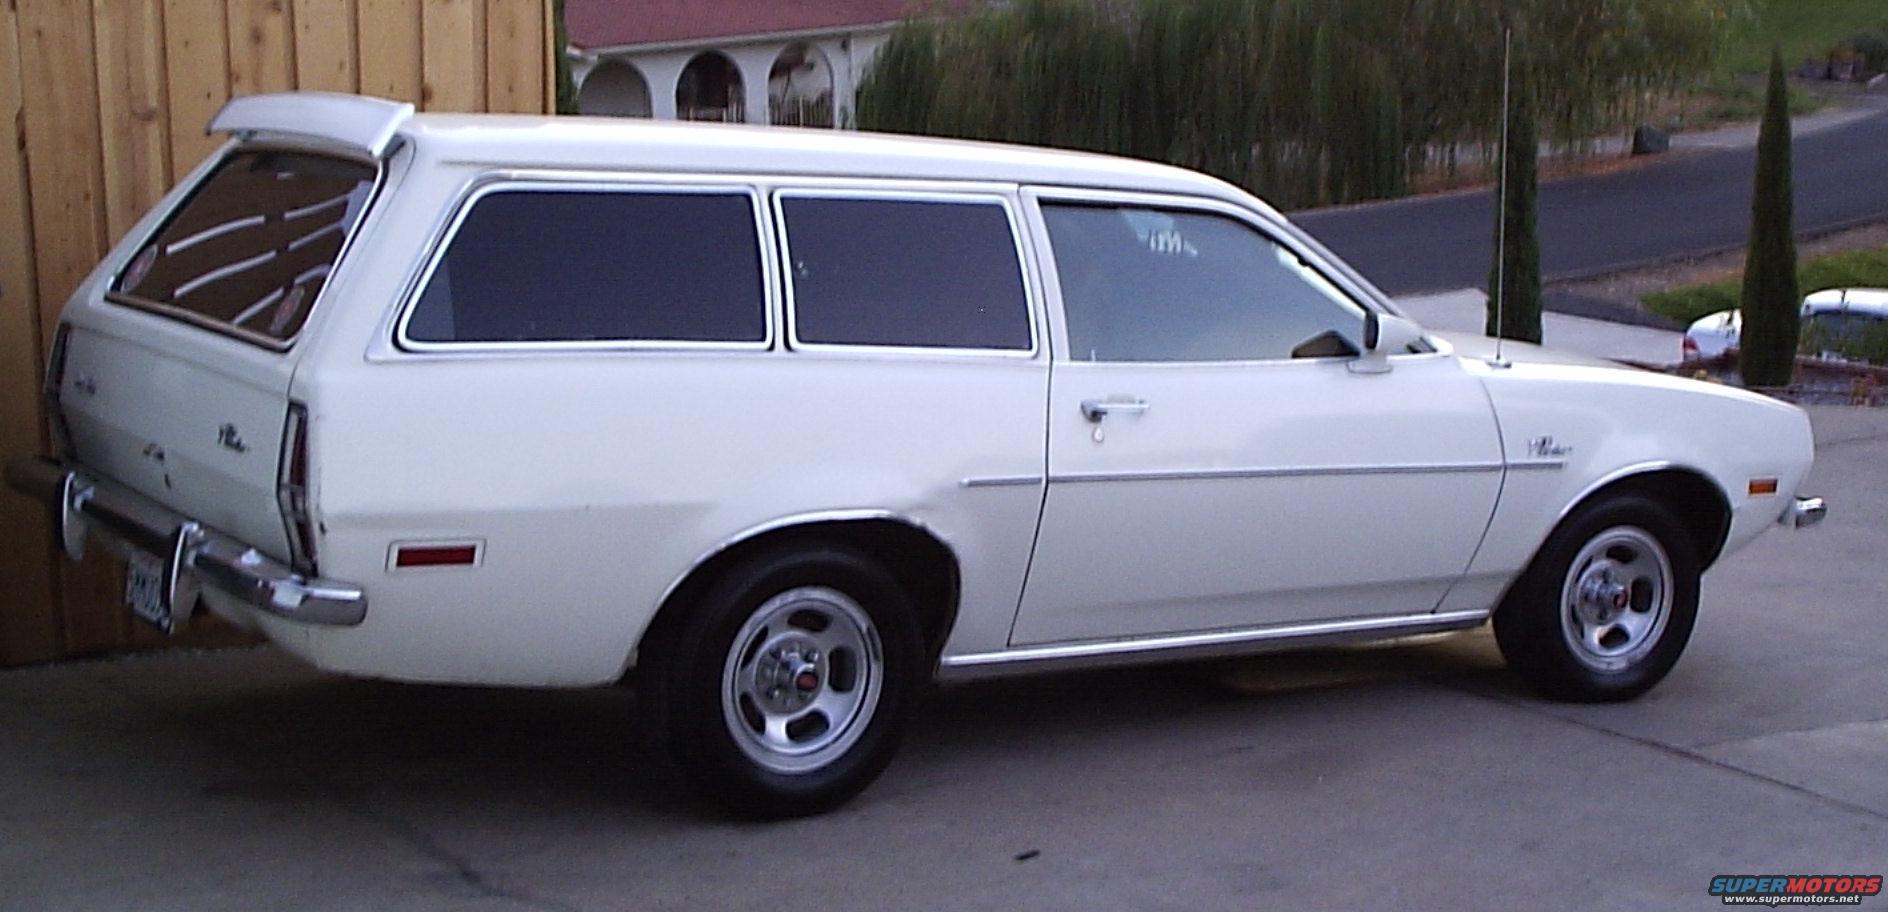 1973 Ford pinto station wagon sale